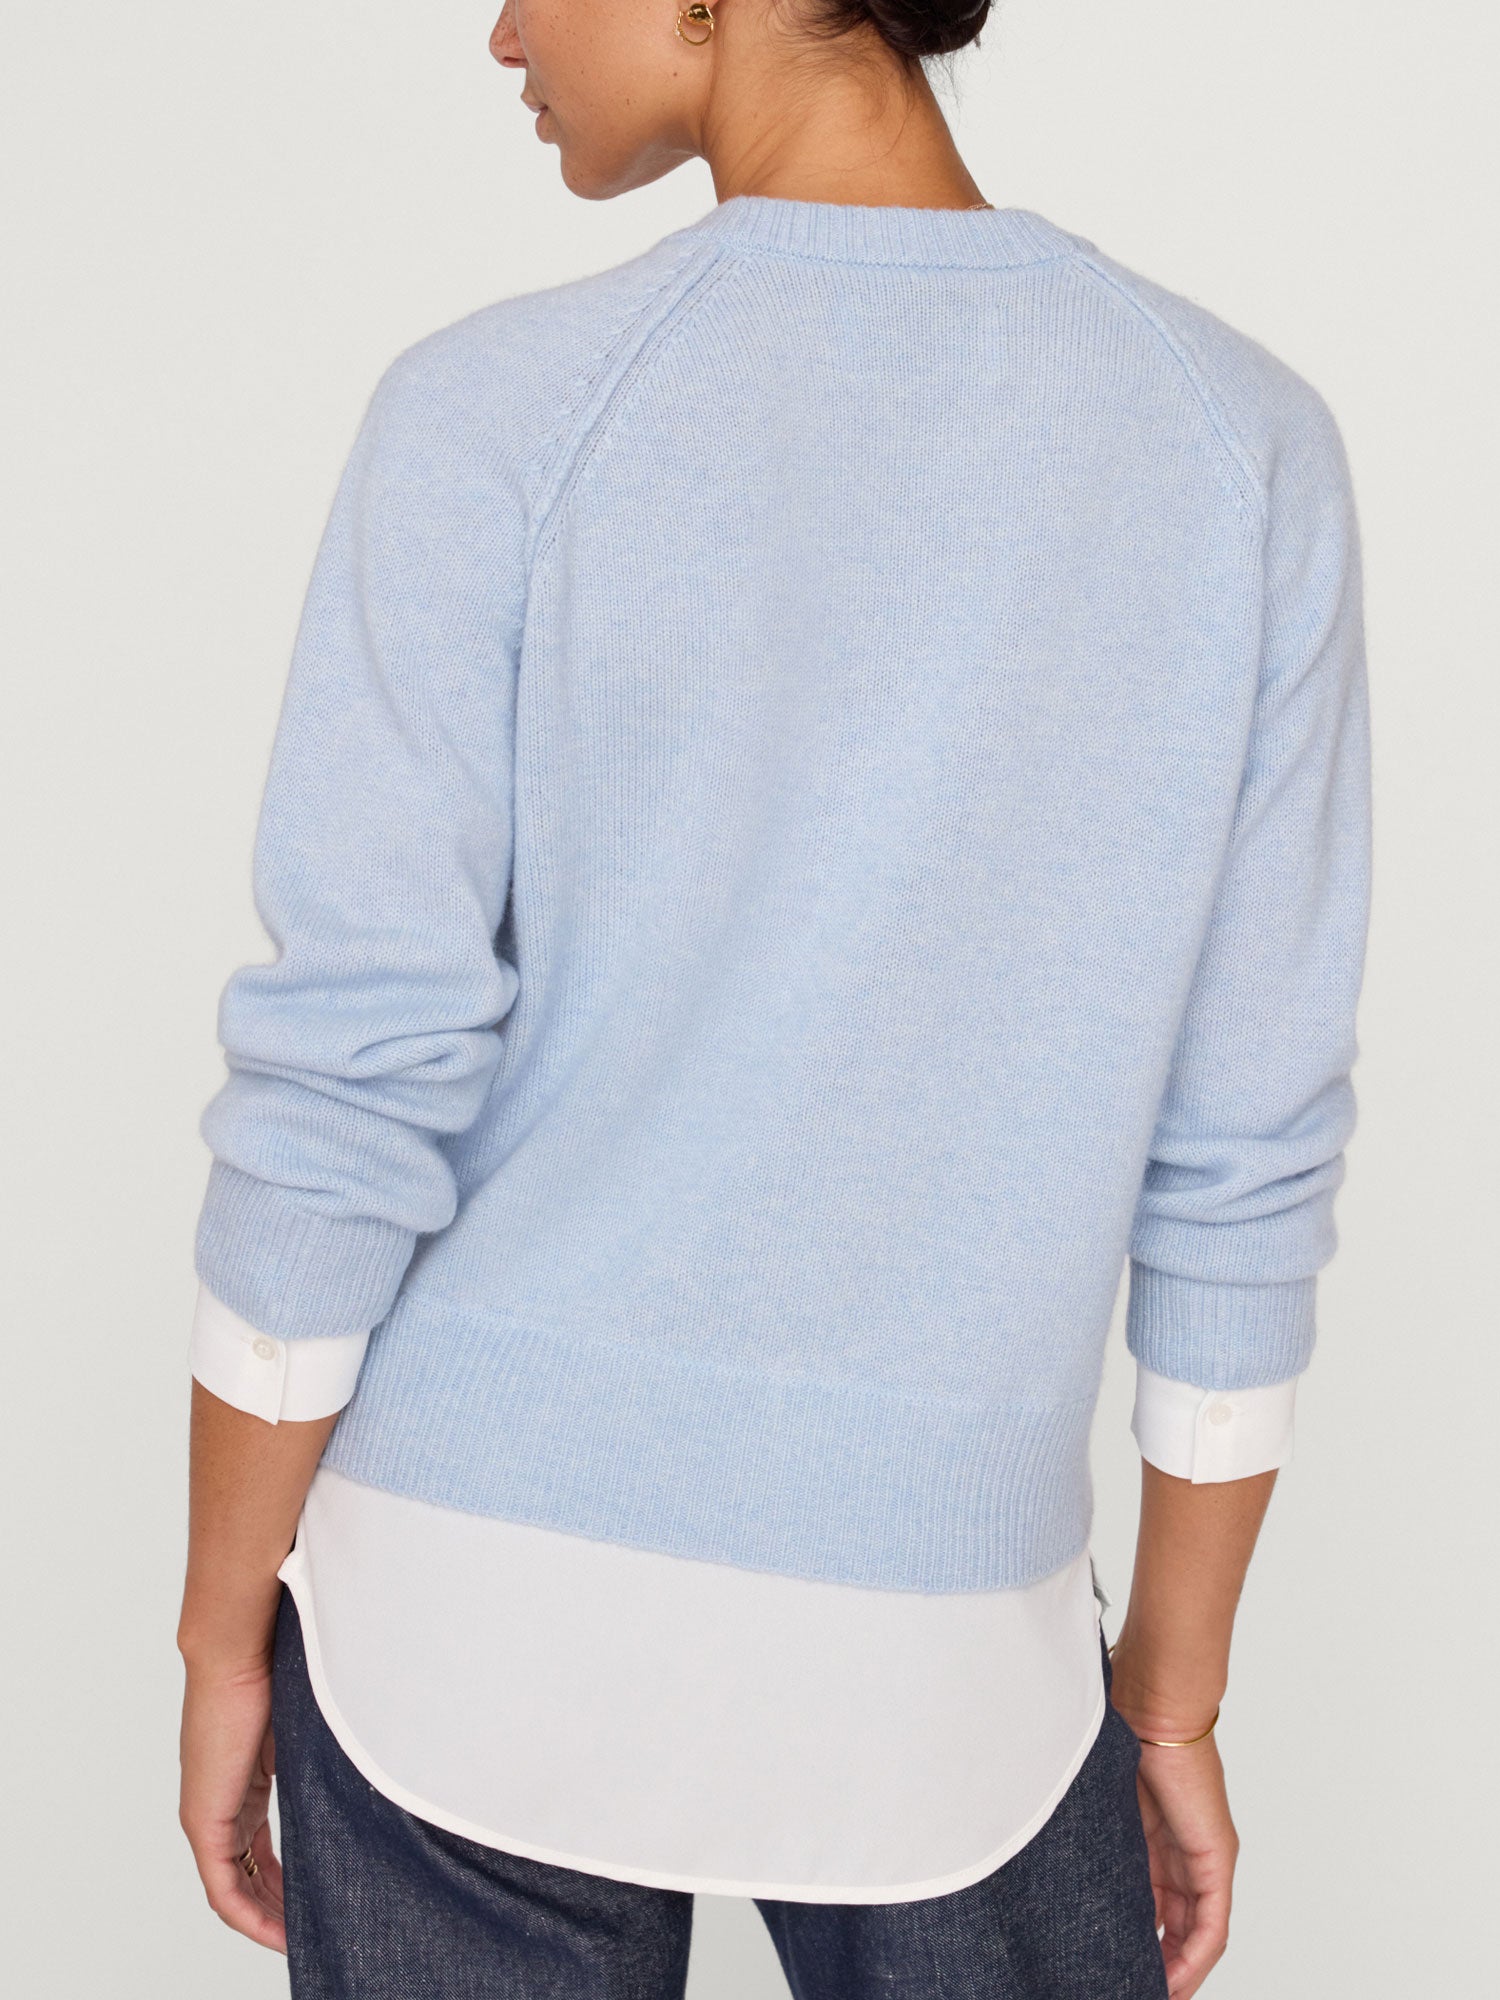 Looker Layered crewneck light blue sweater back view 